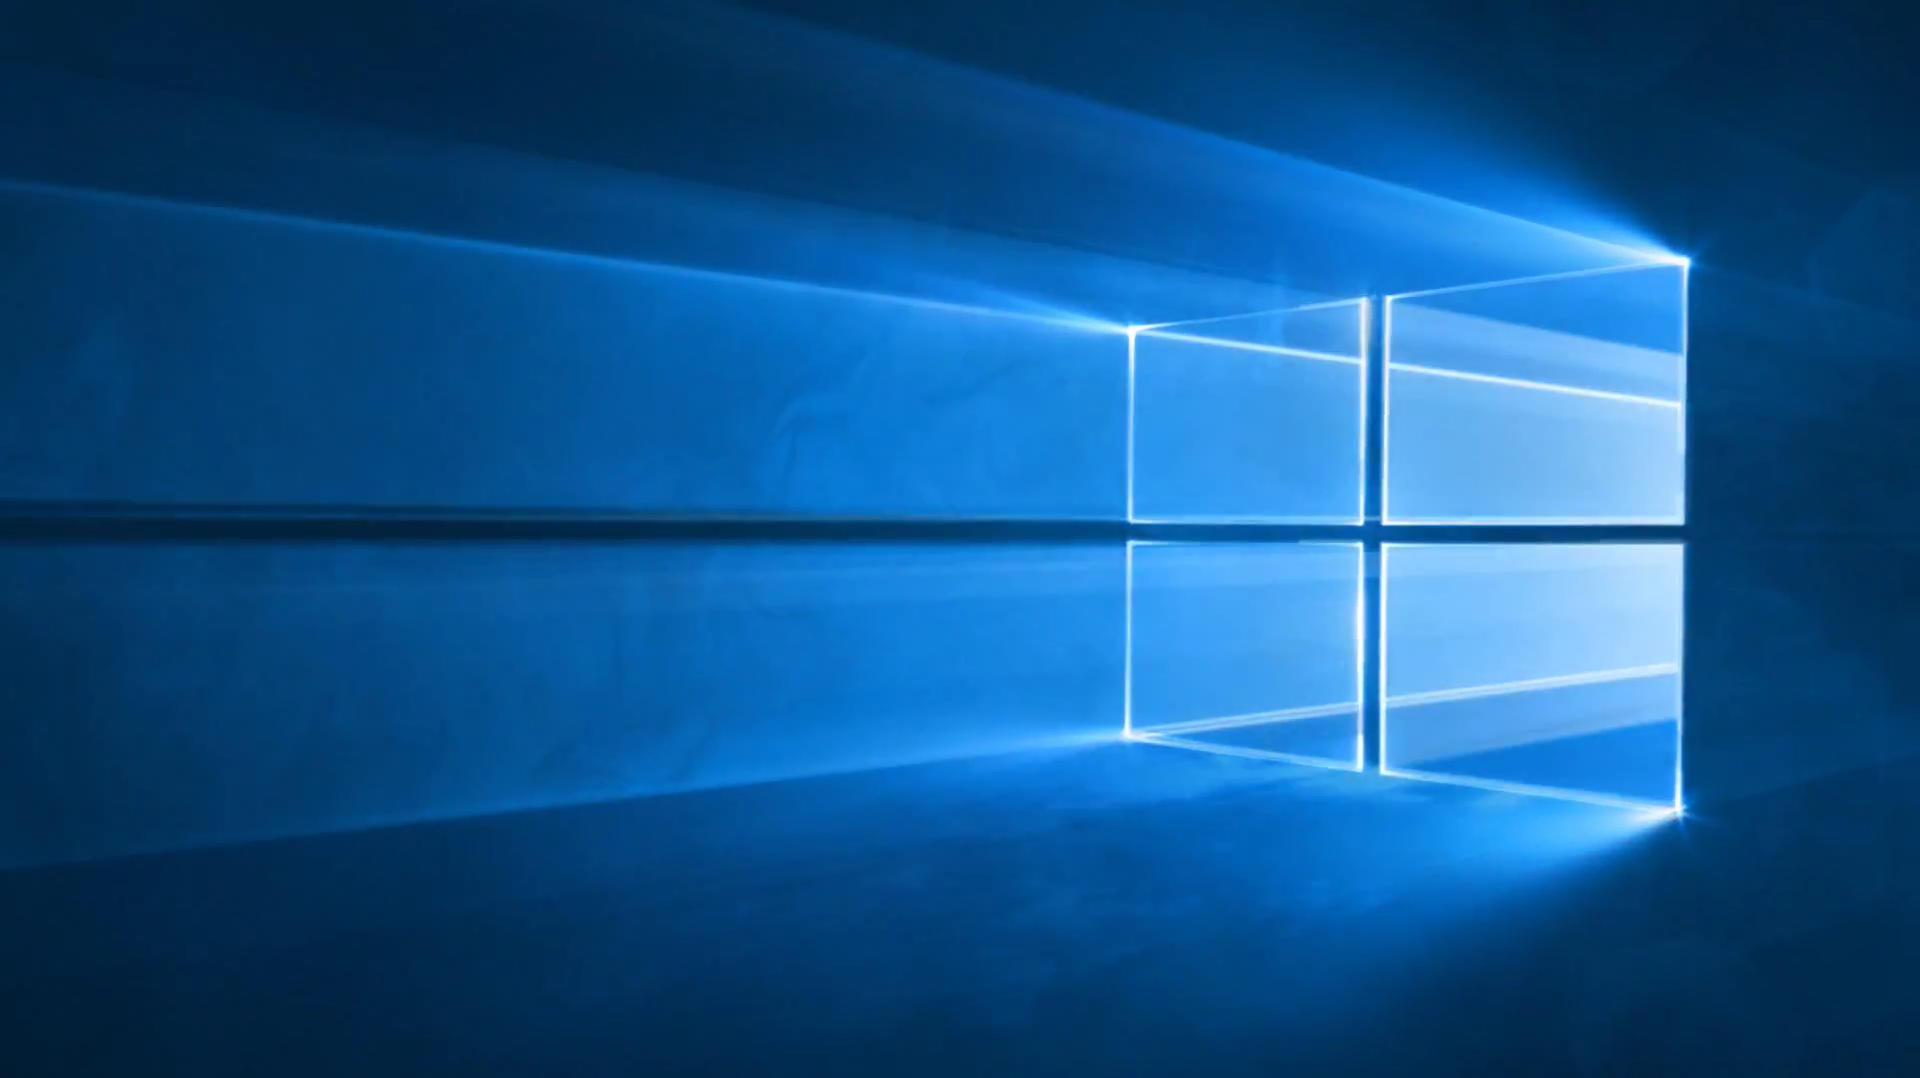 Microsoft Showcases Windows Hero Wallpaper Made From Light